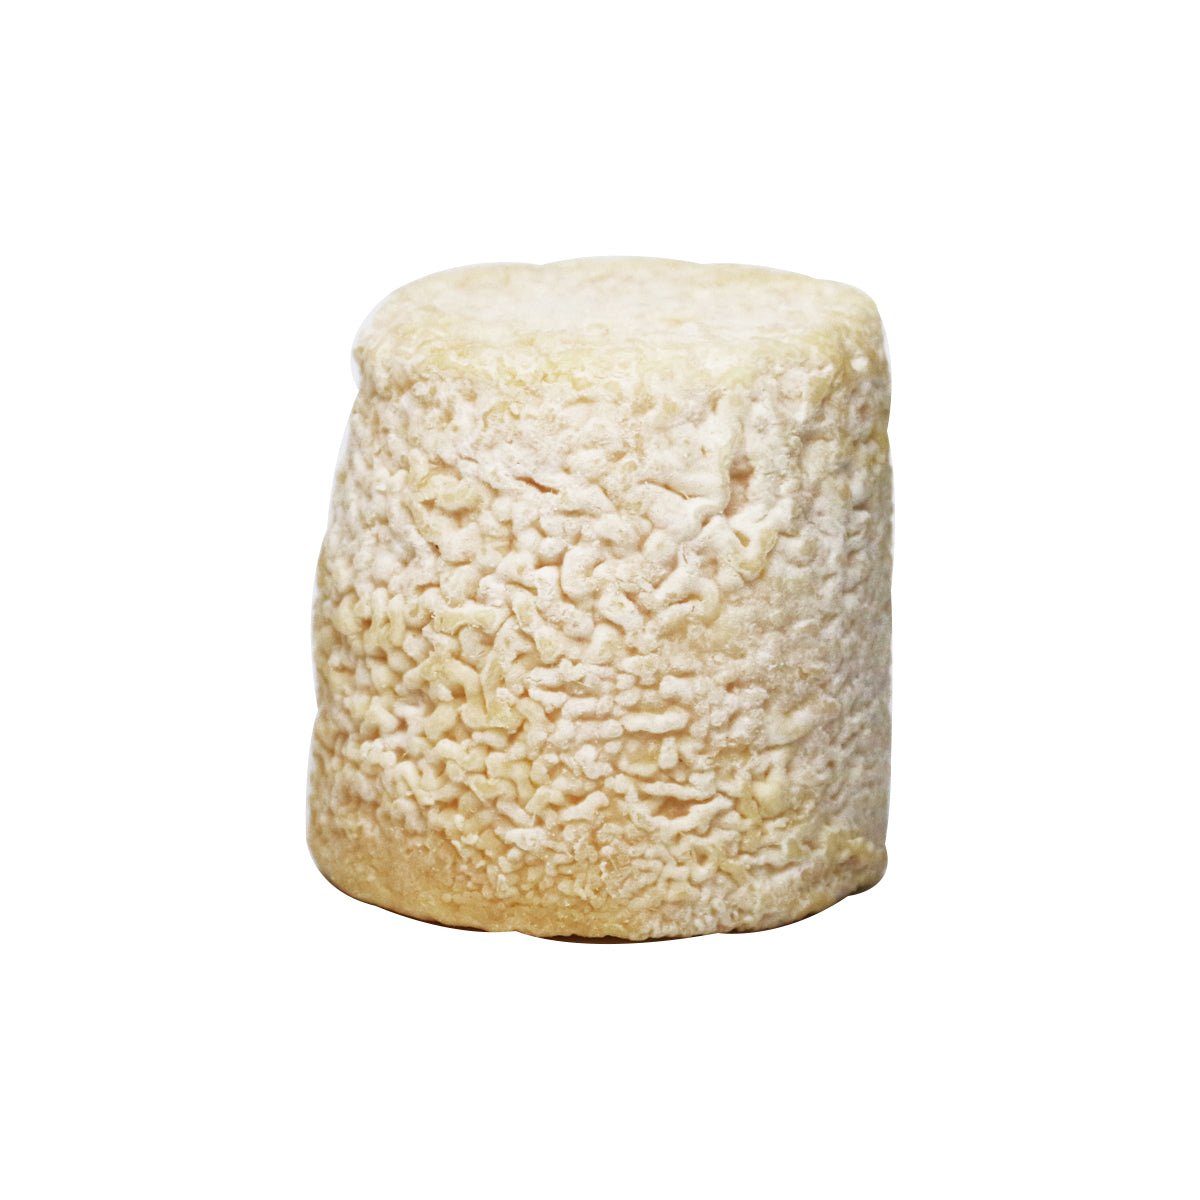 Murray's Chabichou Du Poitou Cheese 4 Oz